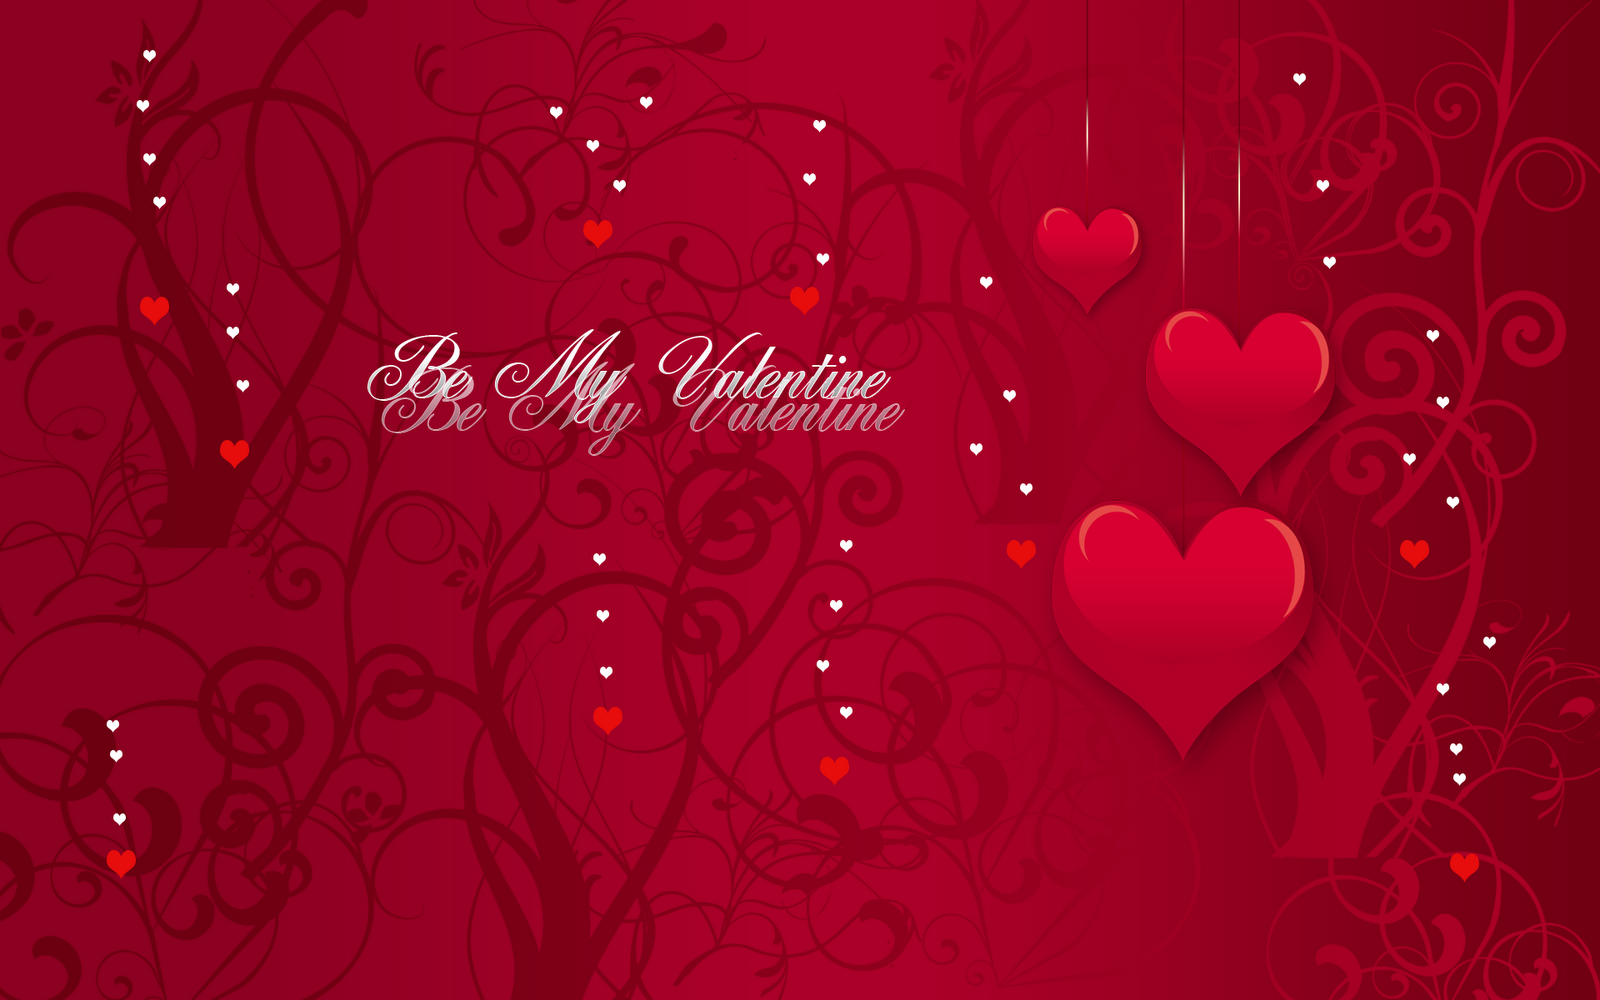 http://4.bp.blogspot.com/_nD_YgZuOadA/TVE7eA4RG0I/AAAAAAAABYA/kdMuen_TUbc/s1600/Be_My_Valentine_hd%20wallpaper.png